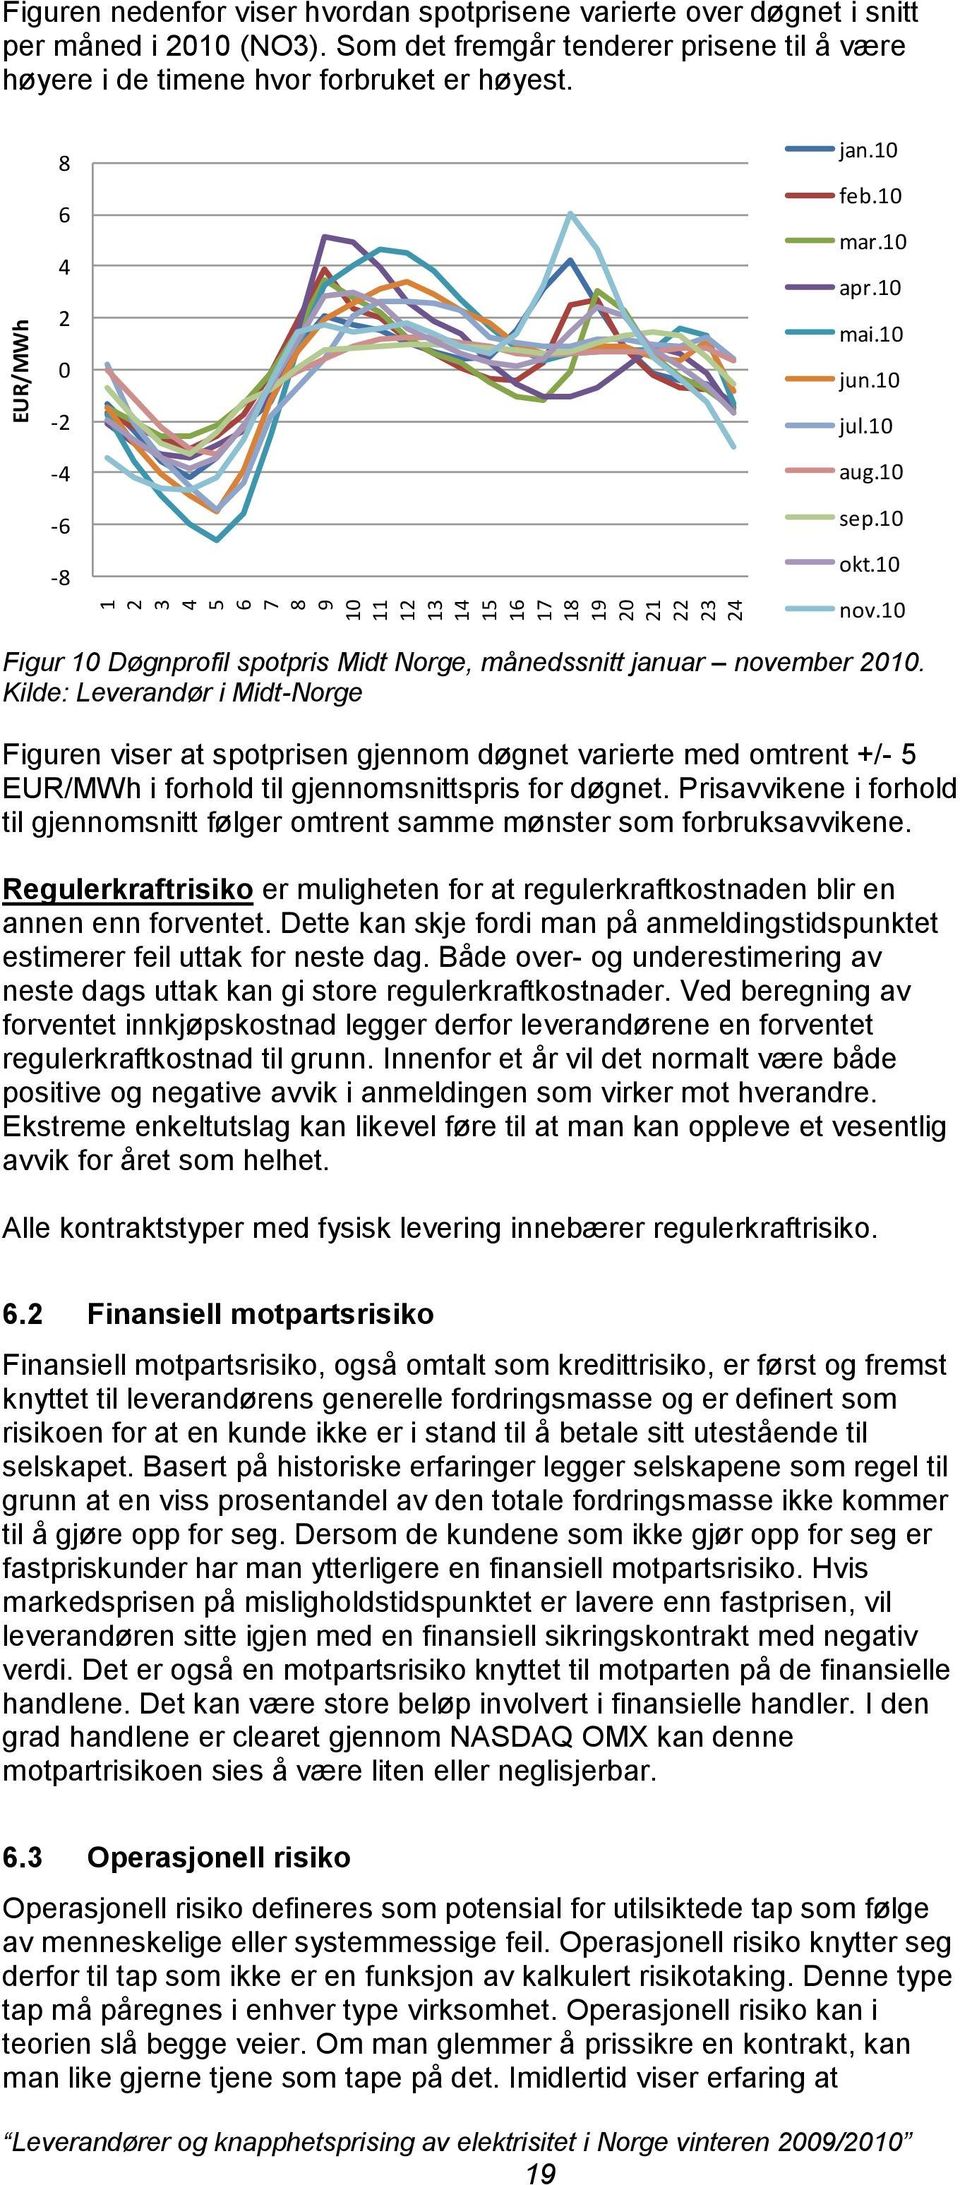 8 6 4 2 0-2 -4-6 -8 2009 Figur 10 Døgnprofil spotpris Midt Norge, månedssnitt januar november 2010.